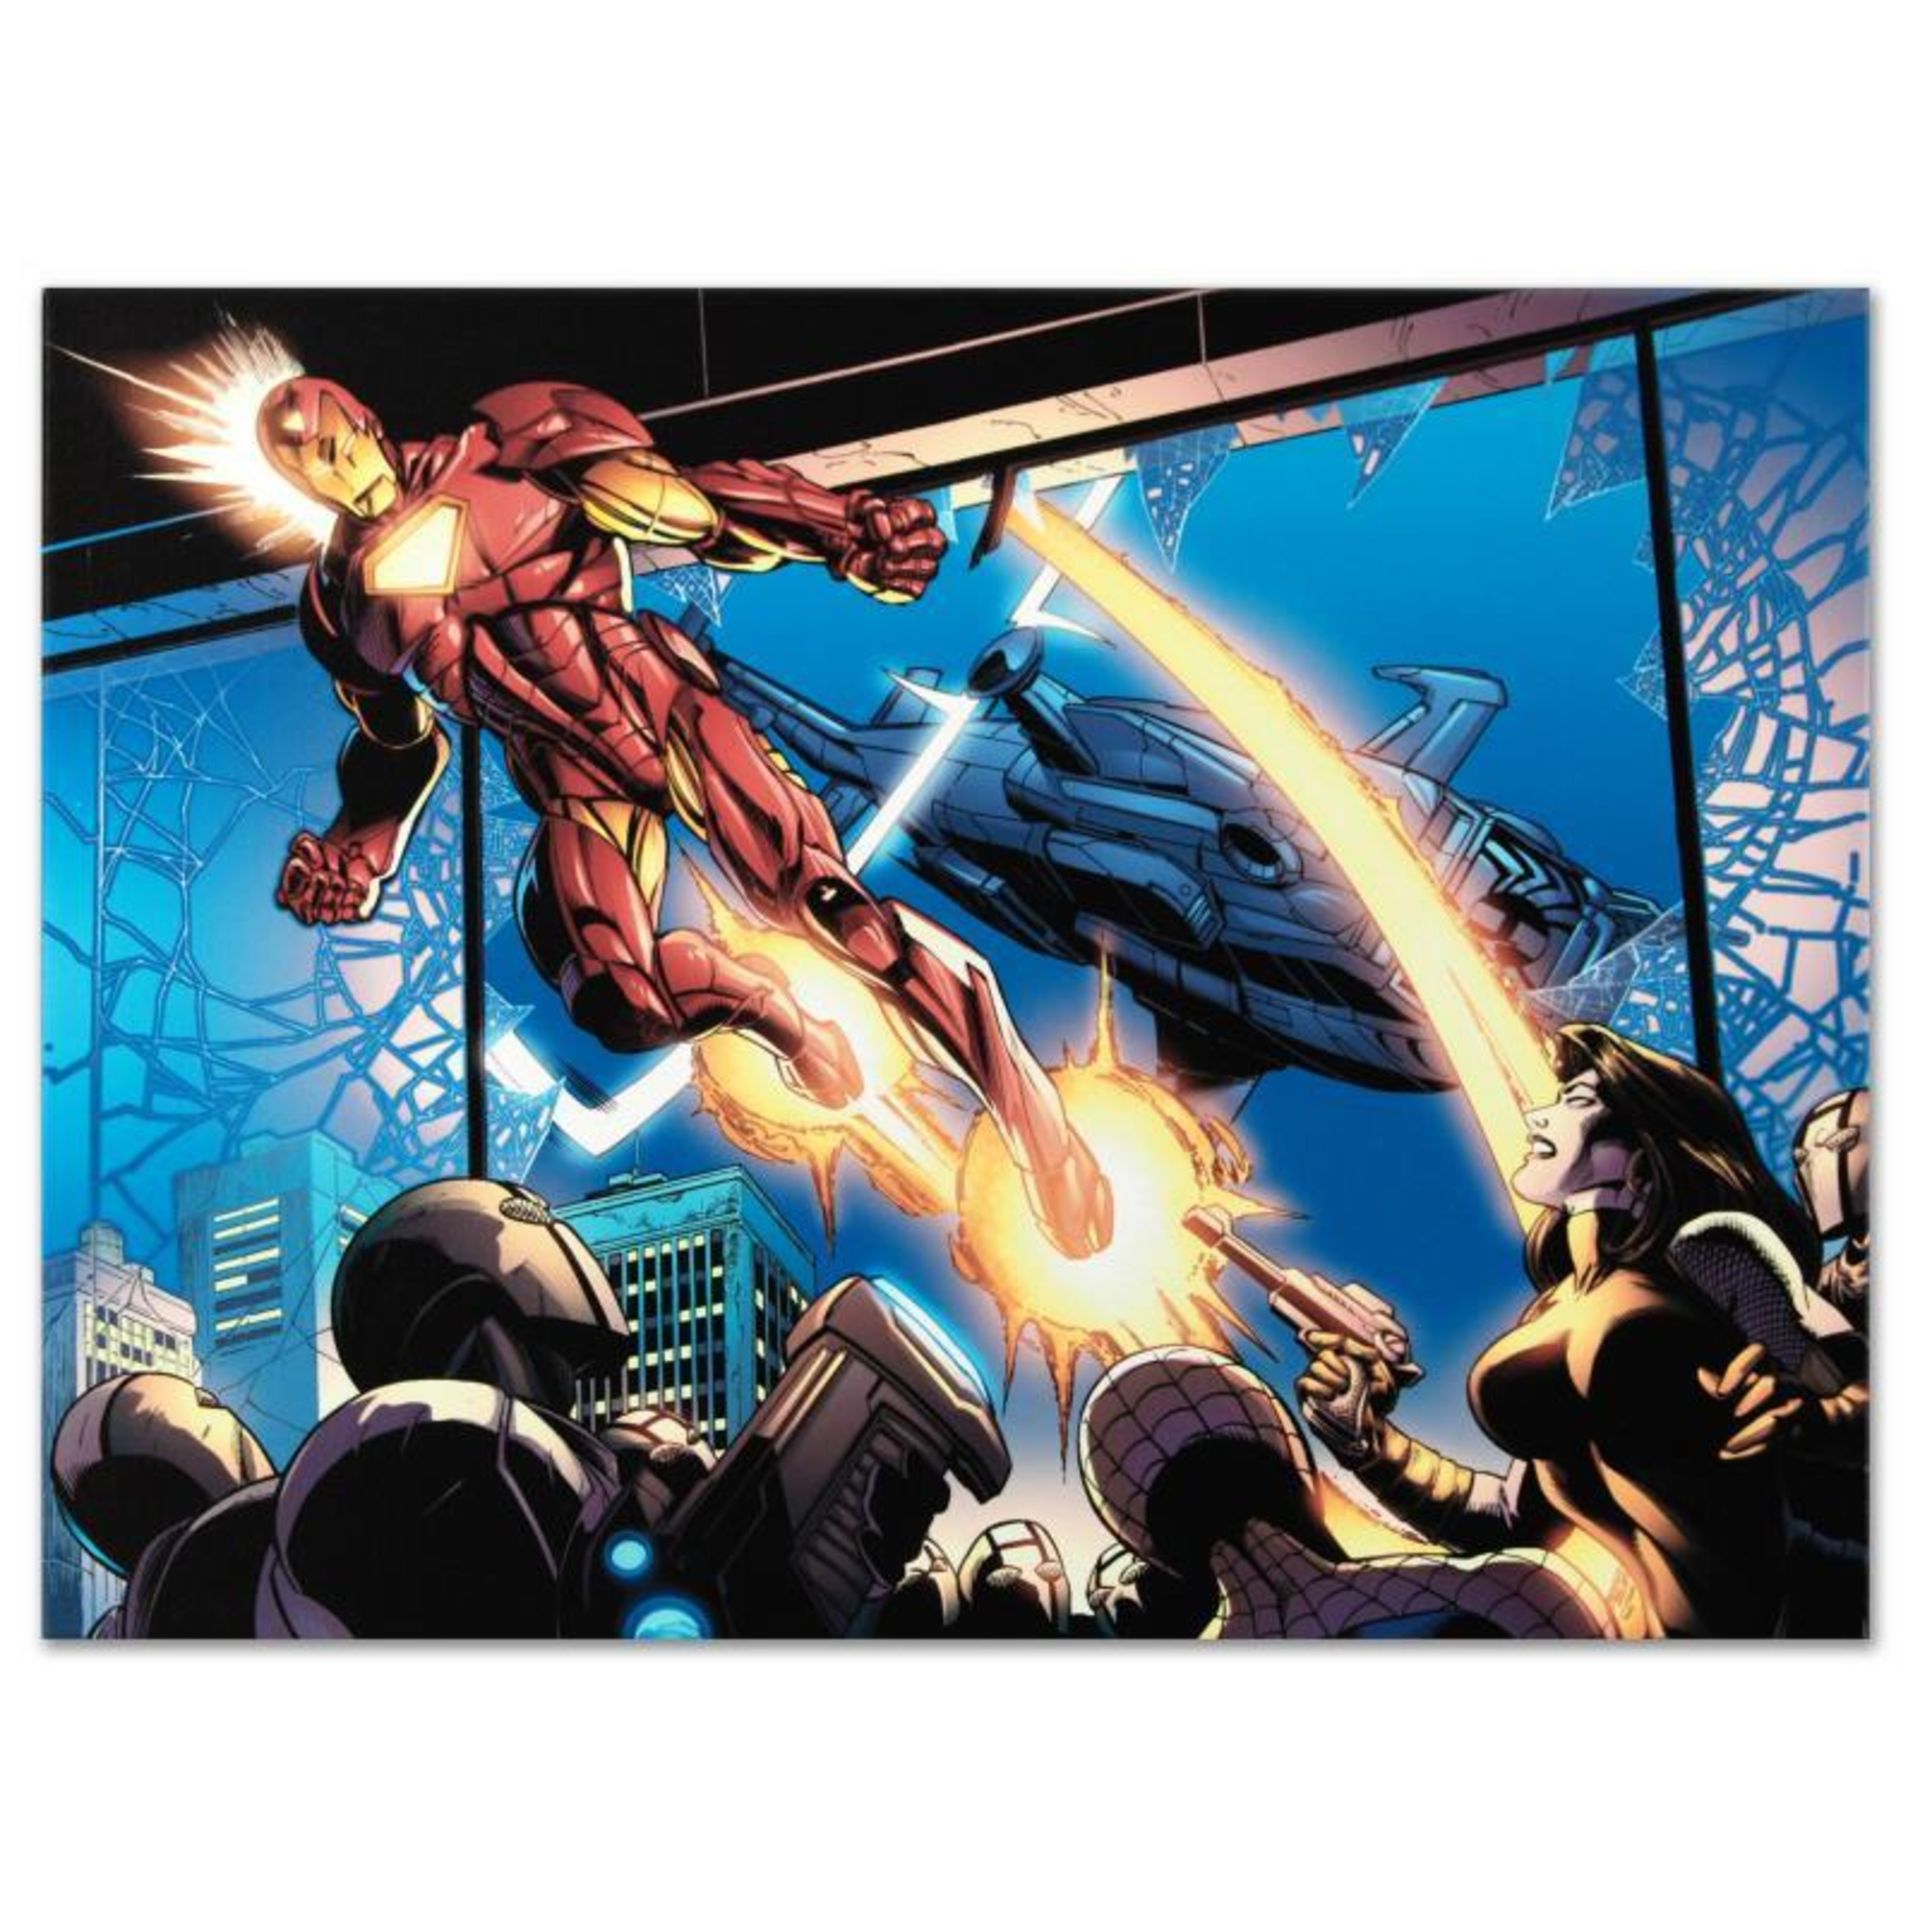 Marvel Comics "Ultimatum: Spider-Man Requiem #1" Numbered Limited Edition Giclee